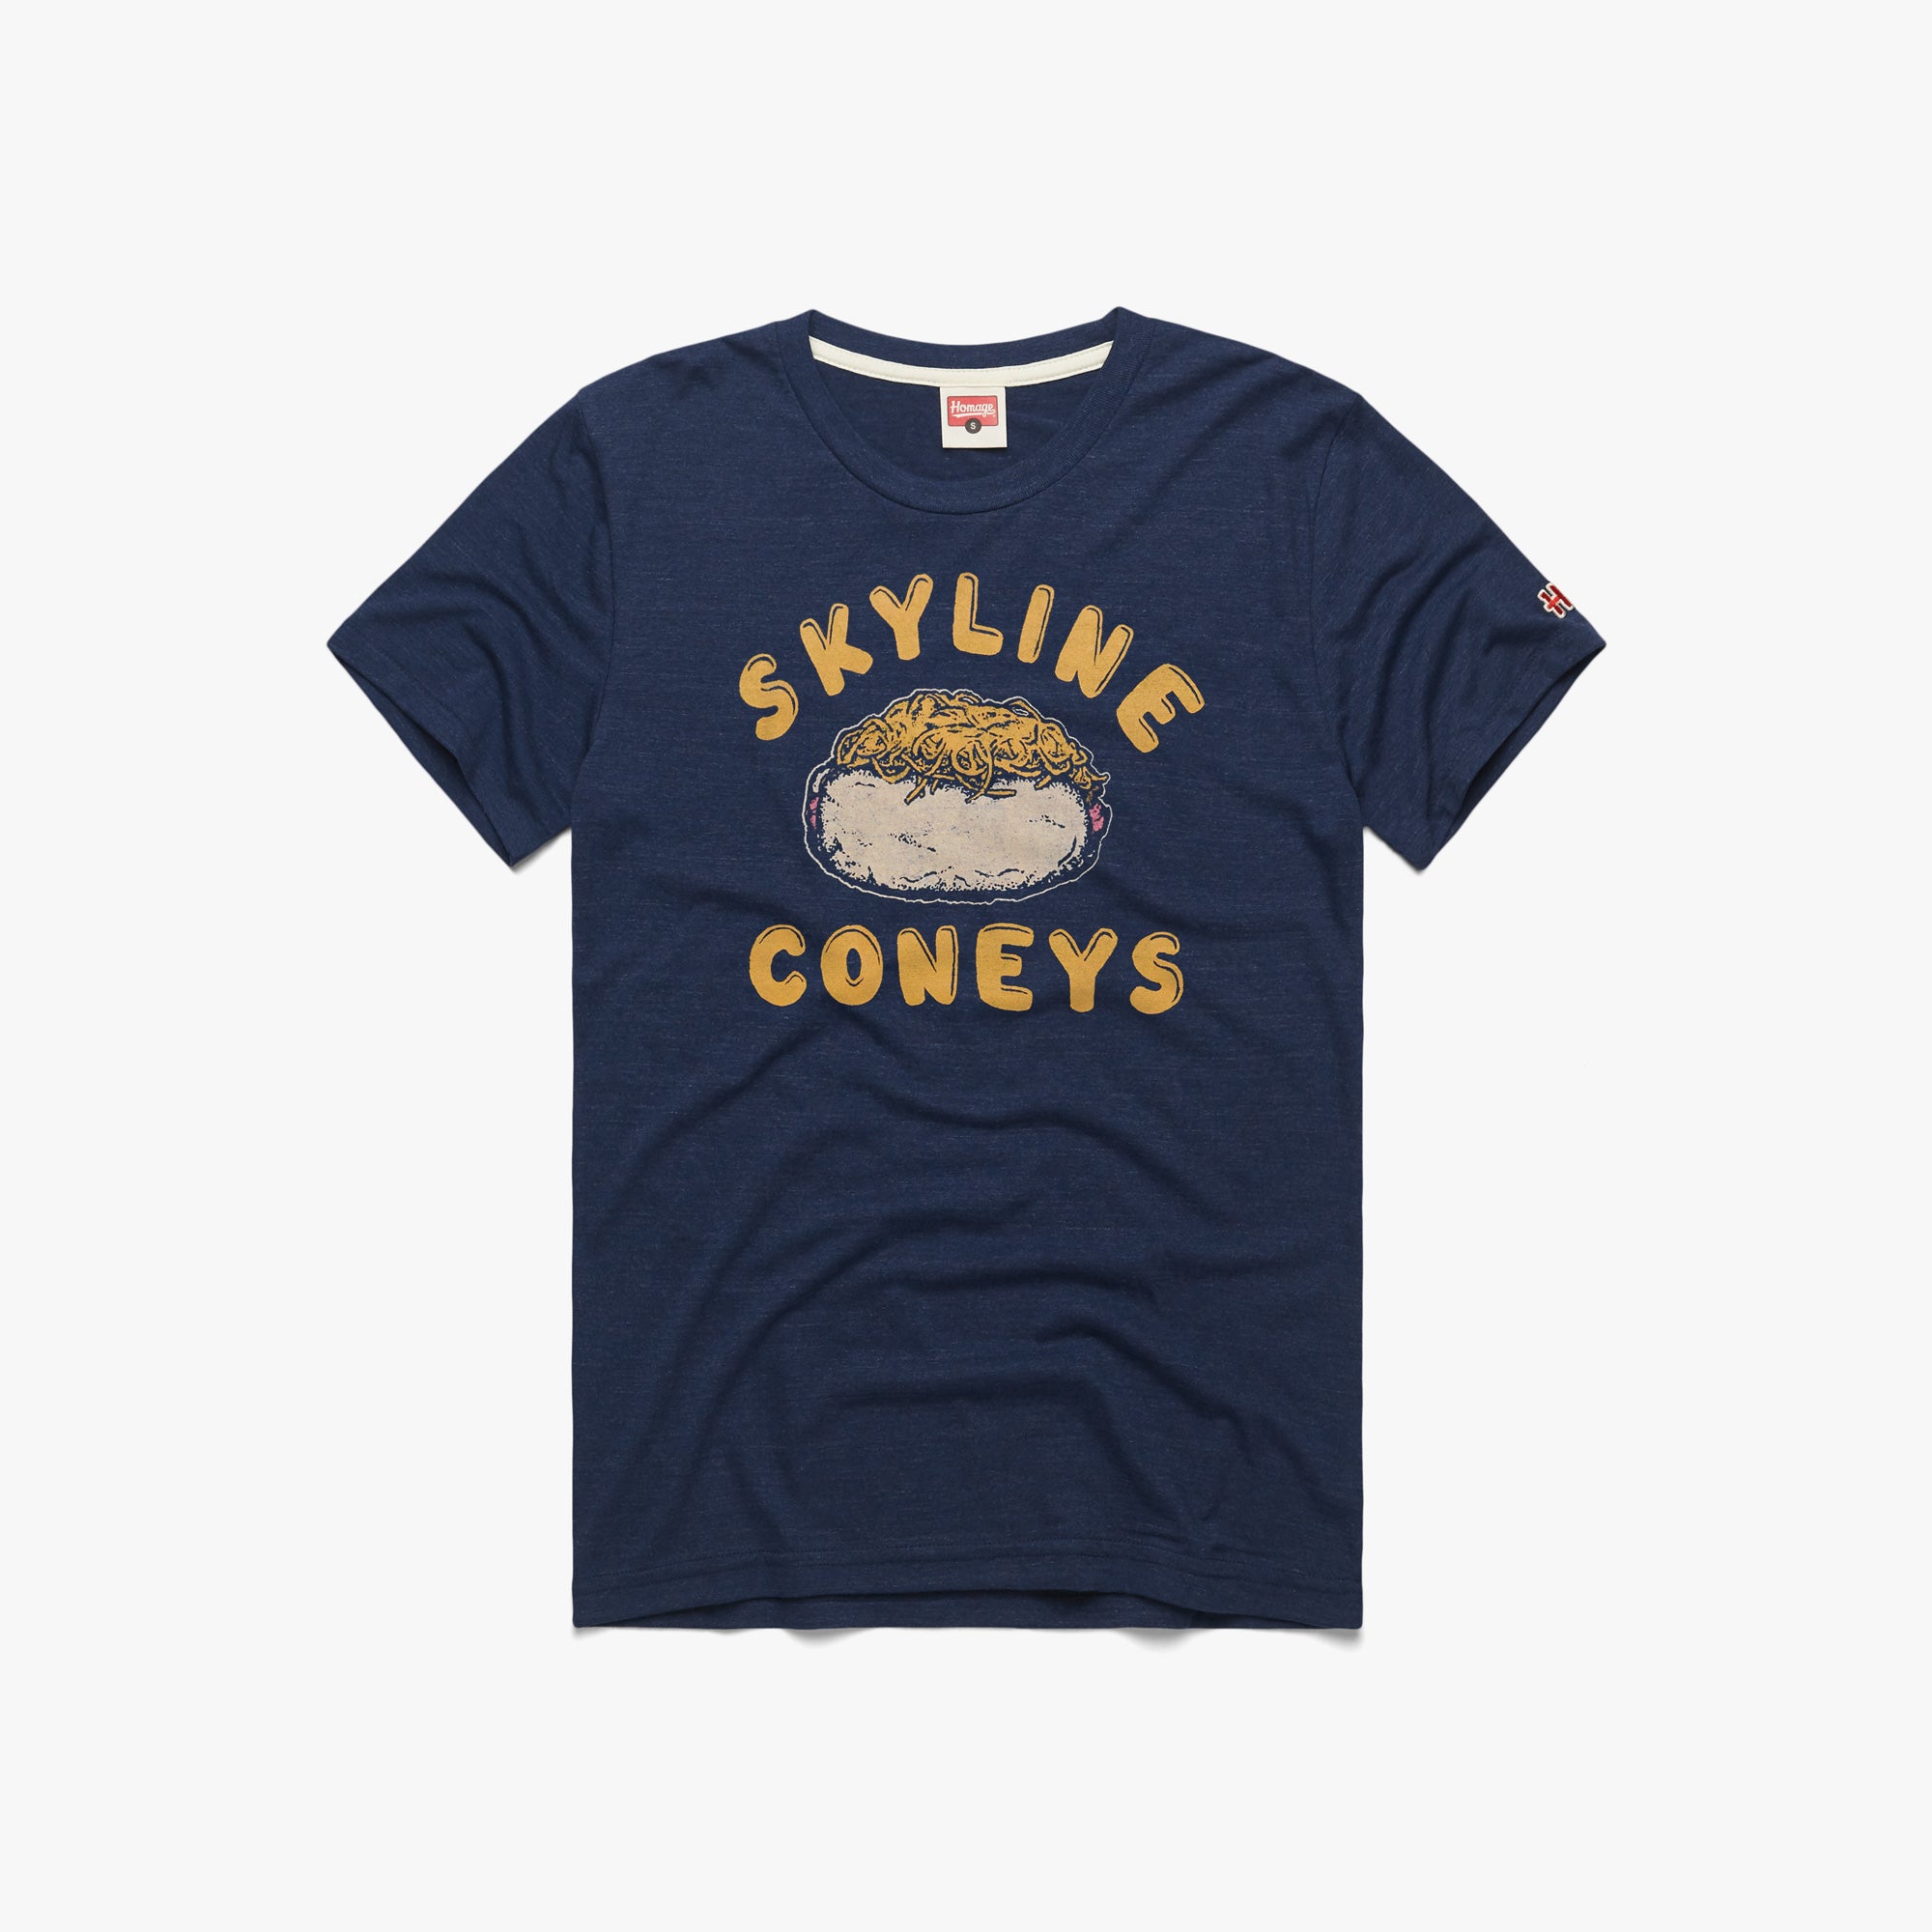 COOLDESIGNITEM Skyline Coneys T-Shirt